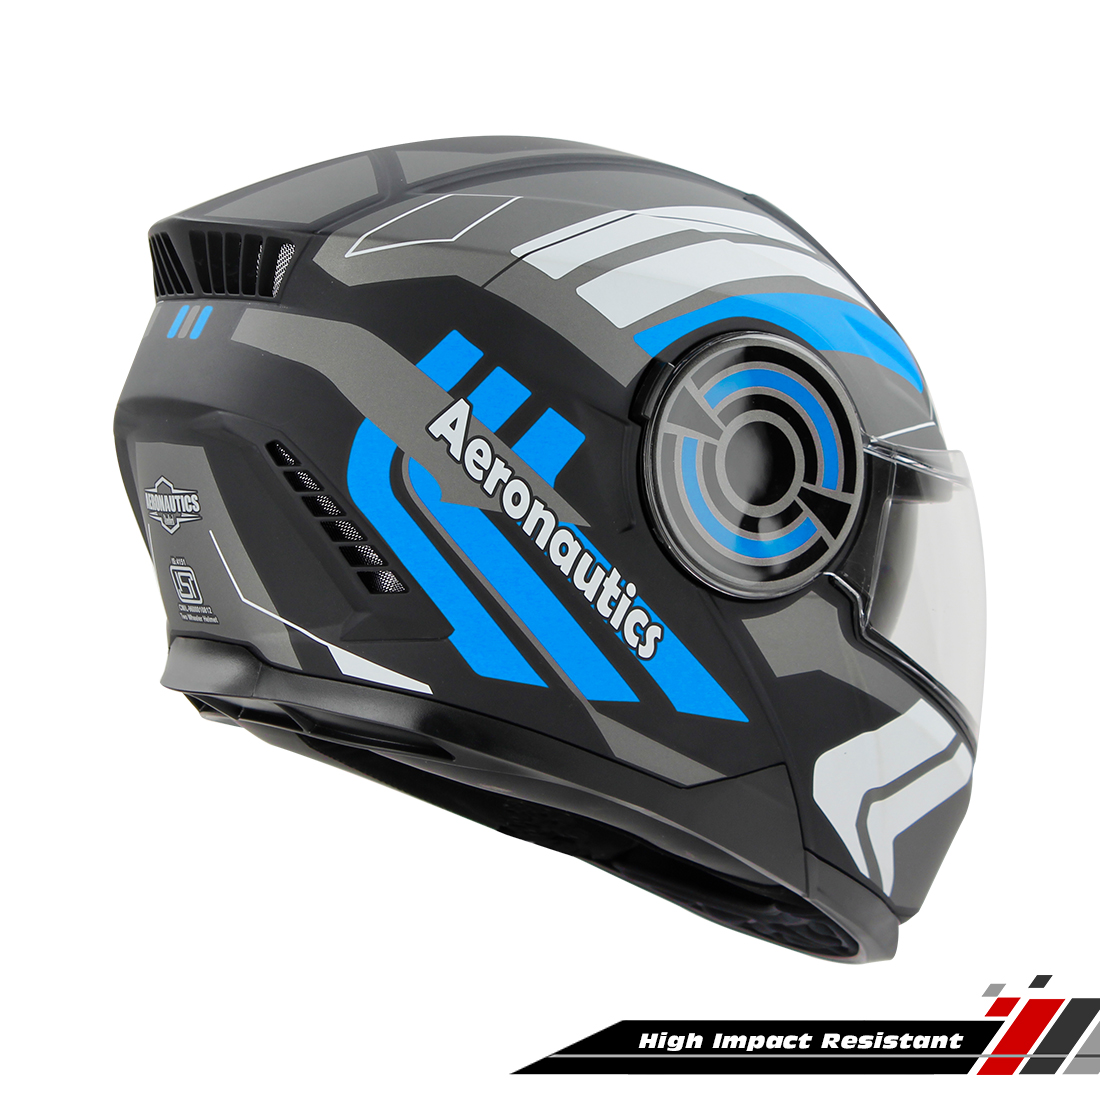 Steelbird SBH-40 Vanguard ISI Certified Full Face Graphic Helmet For Men And Women With Inner Sun Shield (Matt Black Blue)